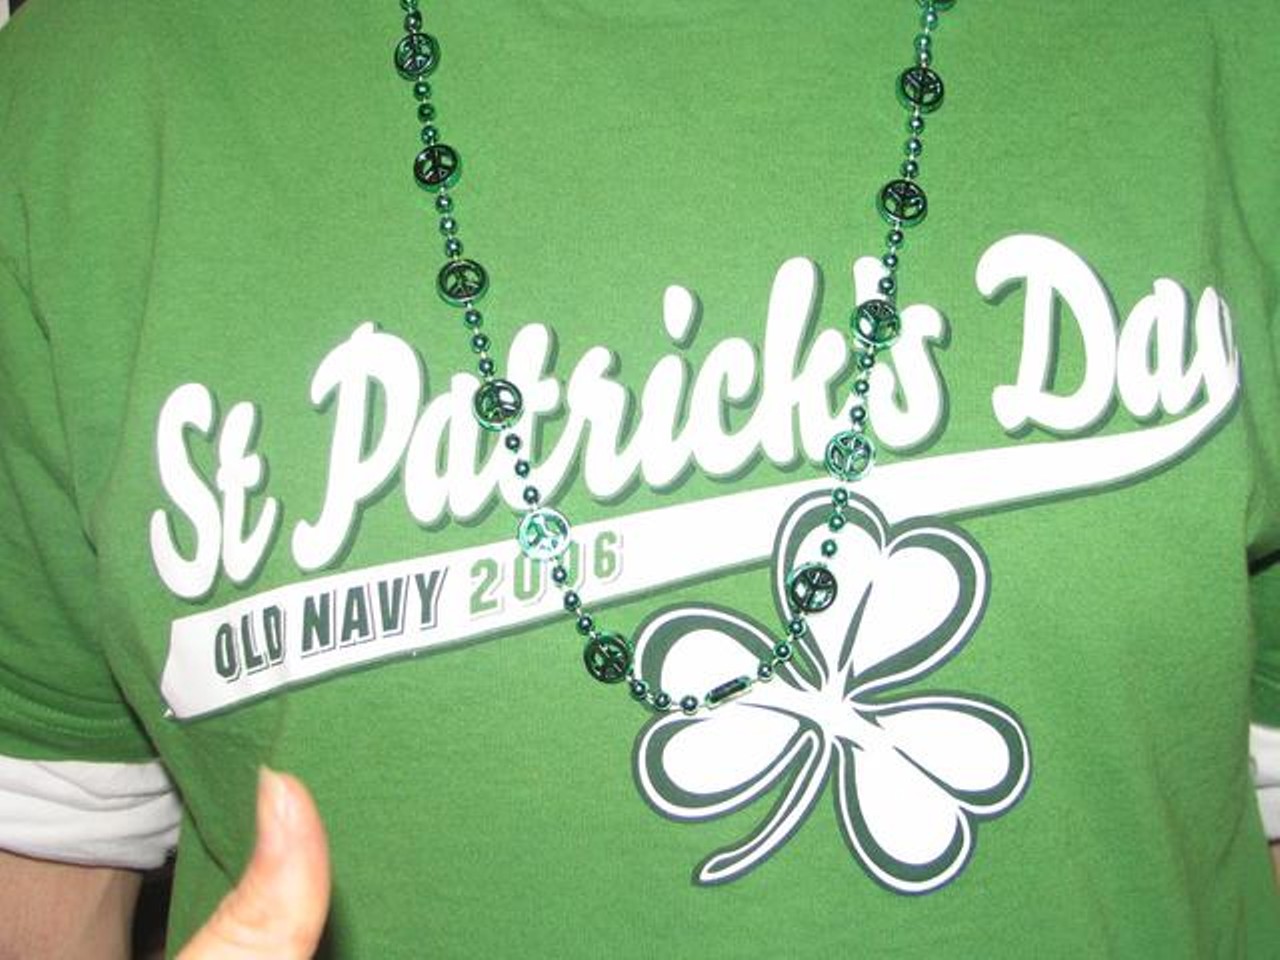 Dogtown St. Patrick's Day Parade